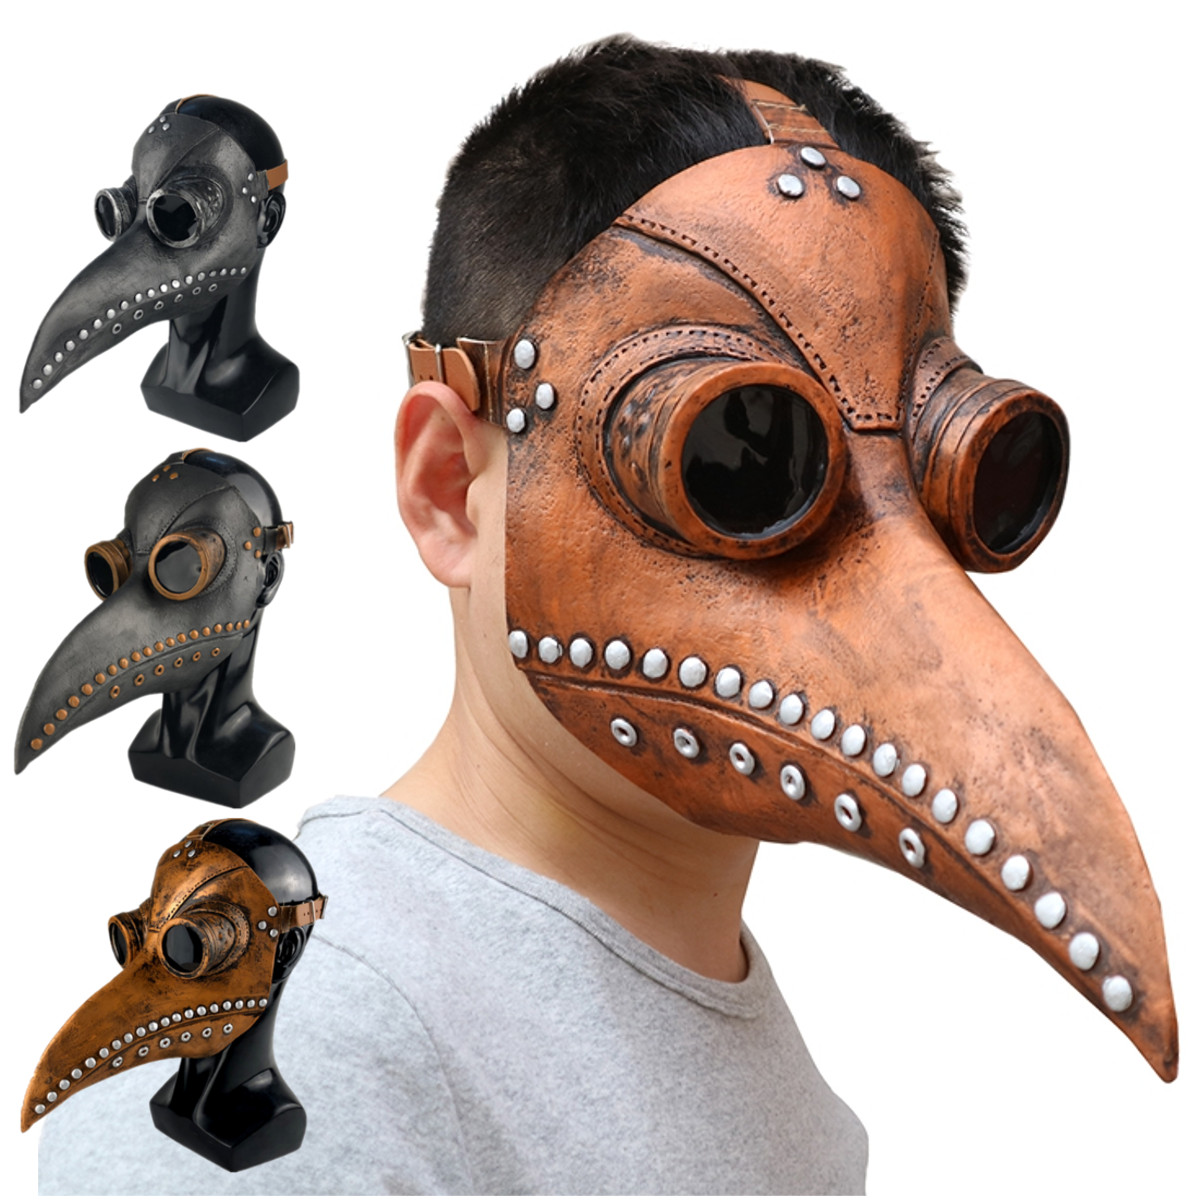 Halloween-Cosplay-Steampunk-Plague-Doctor-Mask-Bird-Beak-Props-Retr-Gothic-Masks-1570036-3